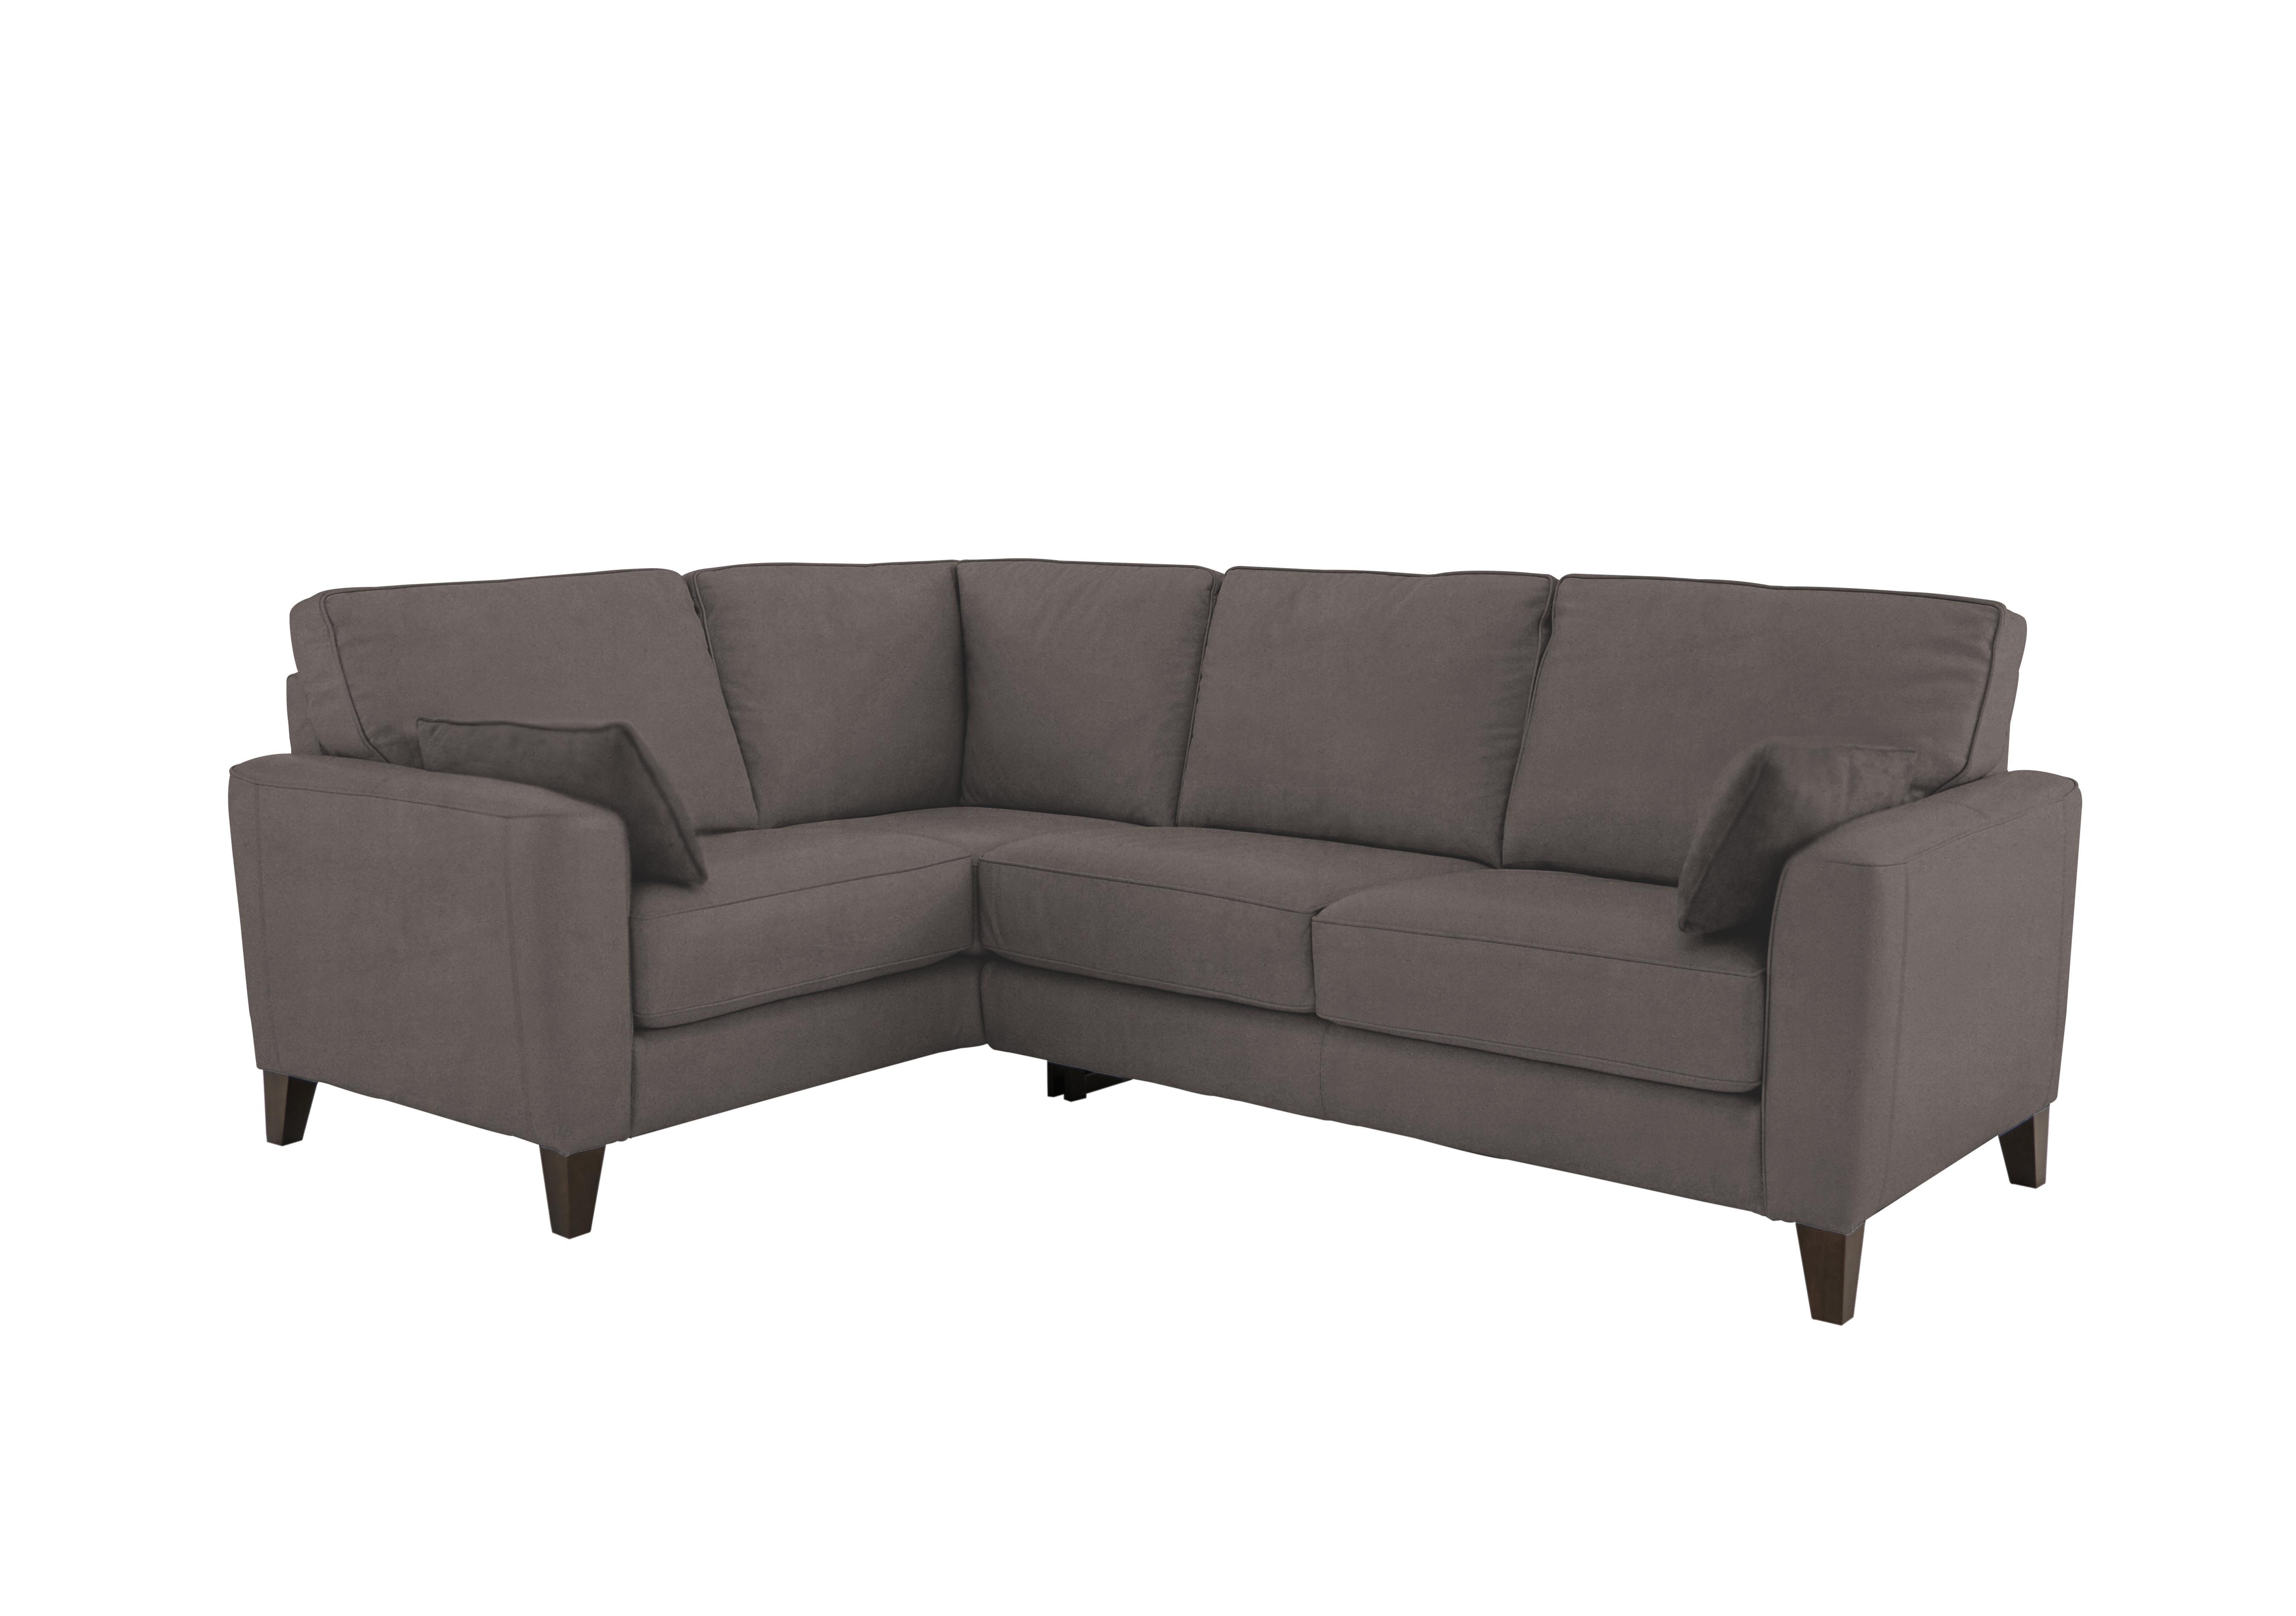 Brondby Small Fabric Corner Sofa in Bfa-Bljr16 Grey on Furniture Village